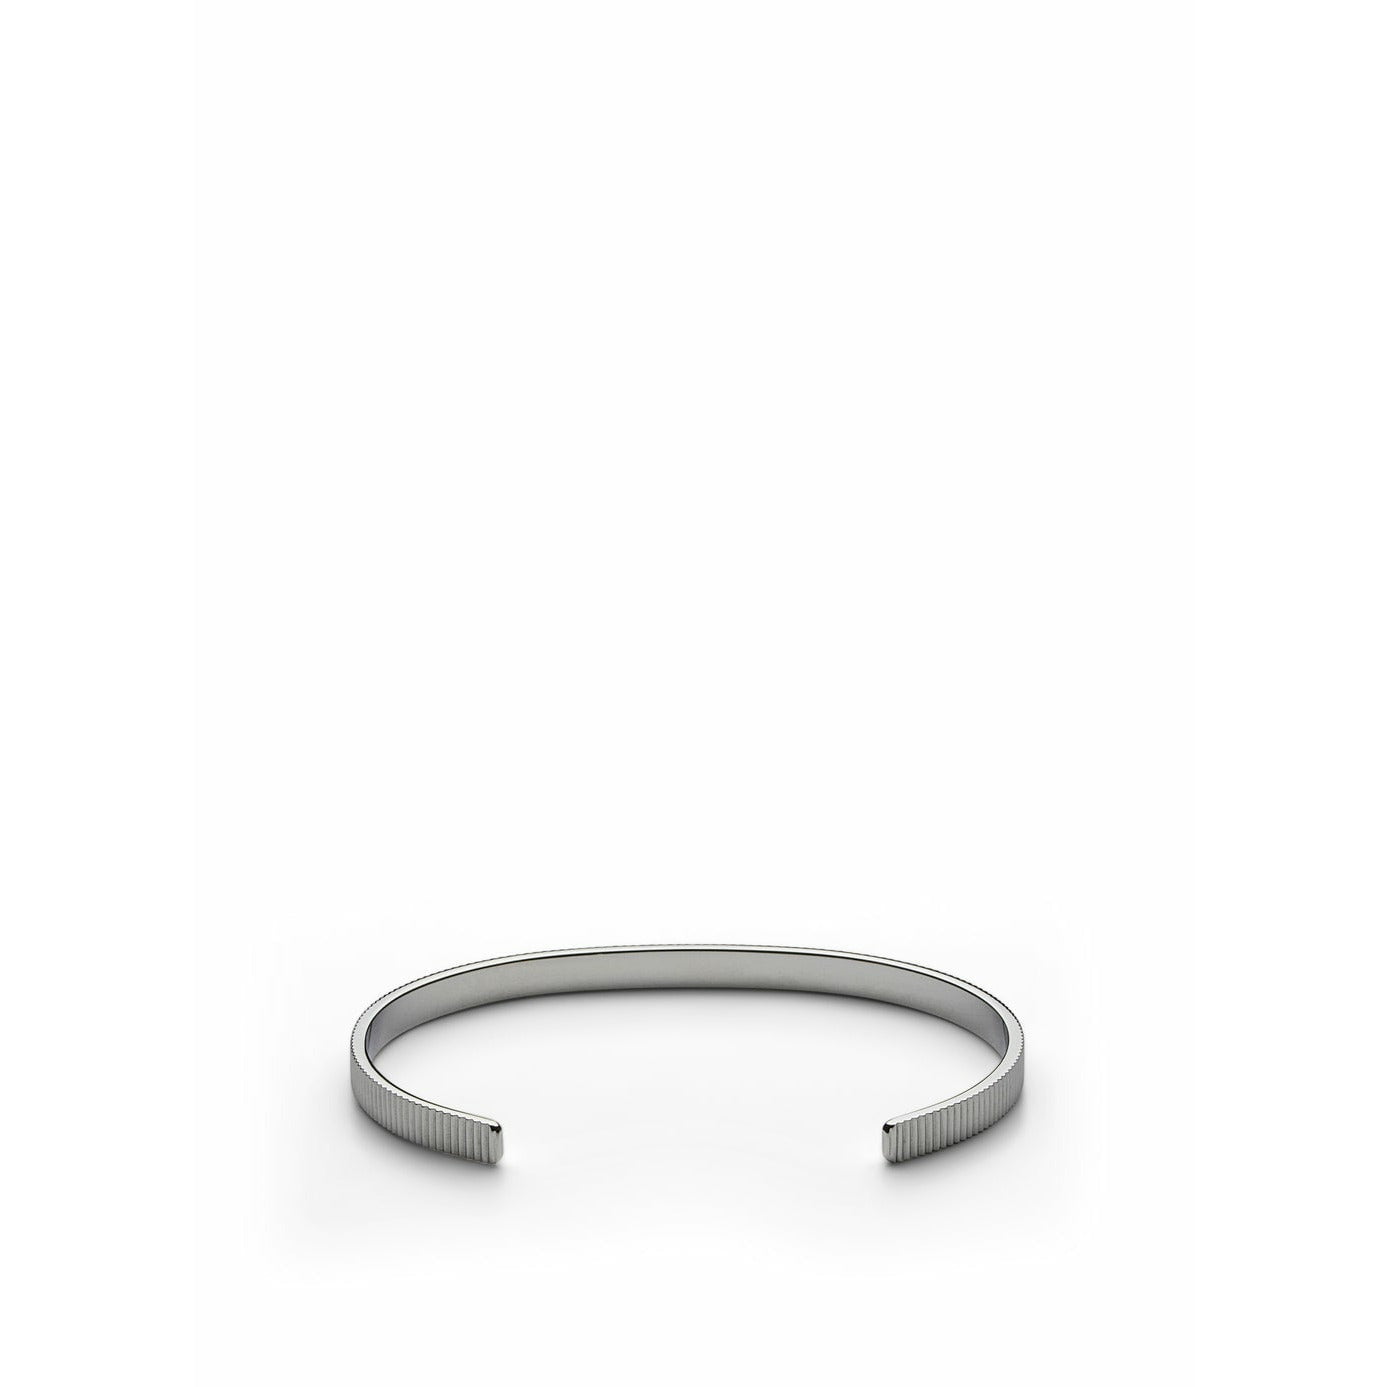 Skultuna geripptes dünnes Armband kleiner polierter Stahl, Ø14,5 cm